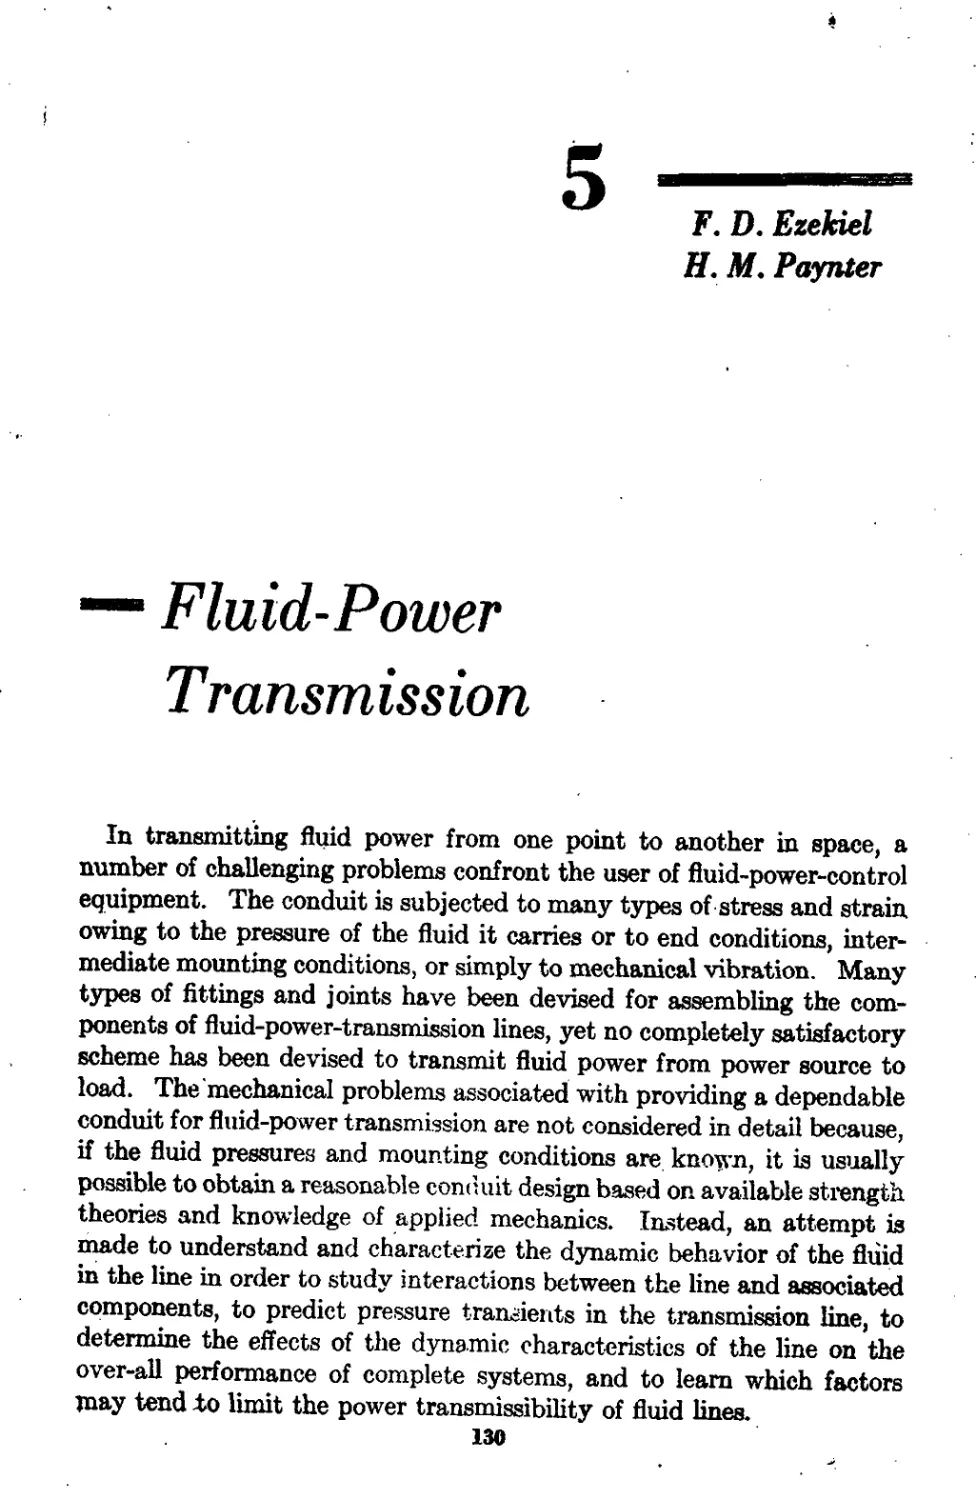 Chapter 5 Fluid-Power Transmission: F. D. Ezekiel and H. M. Paynter